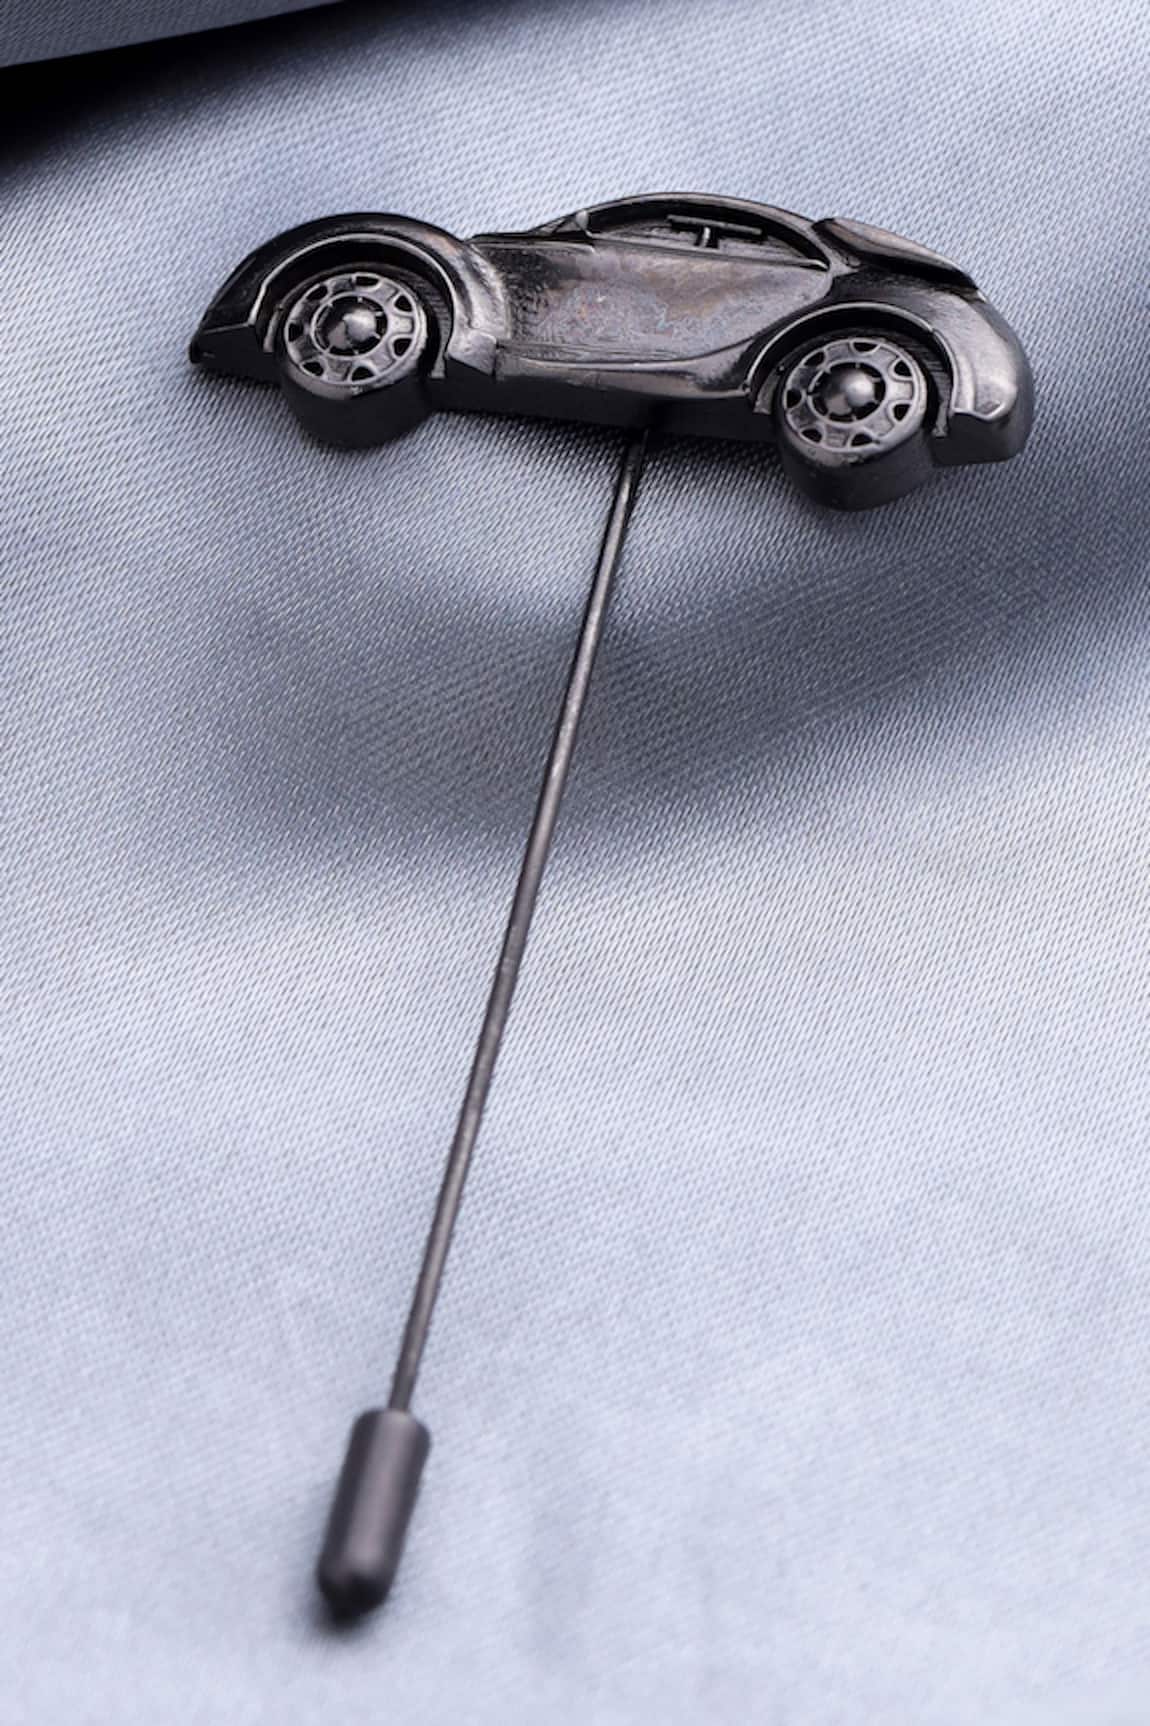 Cosa Nostraa Car Power Brass Lapel Pin